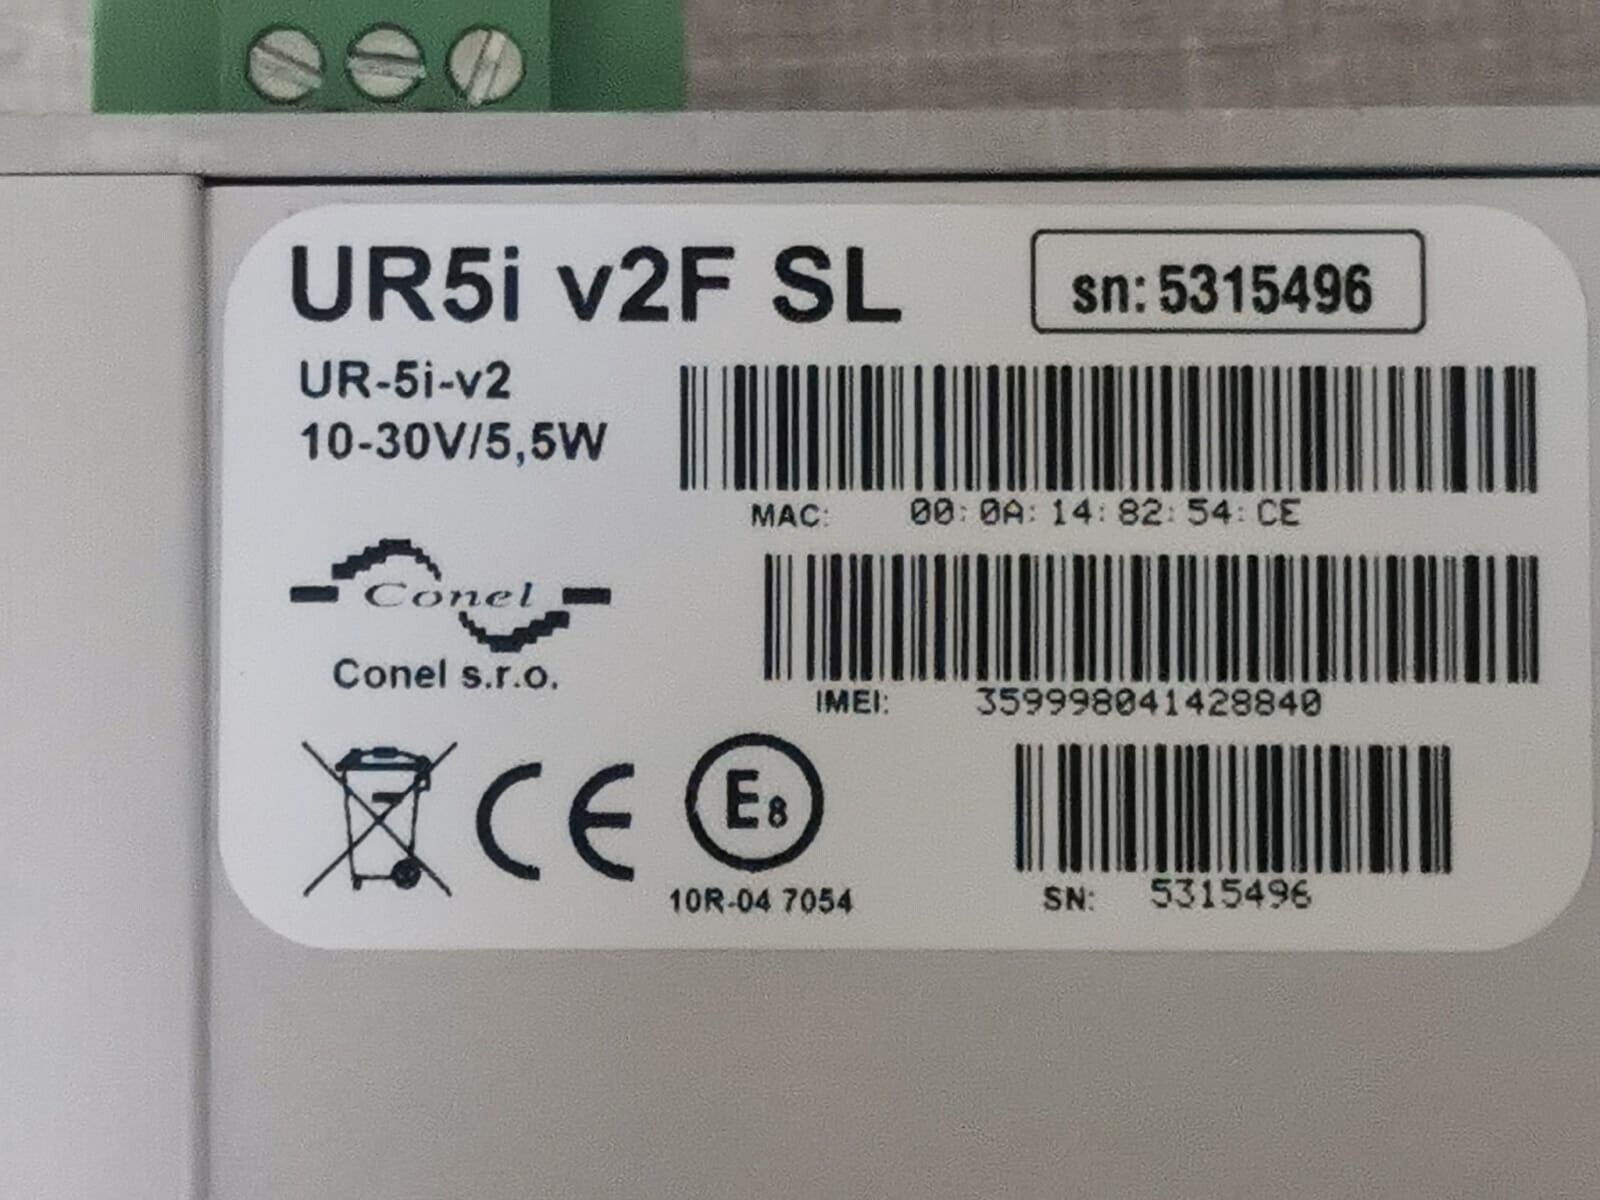 USED CONEL UR5i v2F SL Networking Device - Orbit Surplus